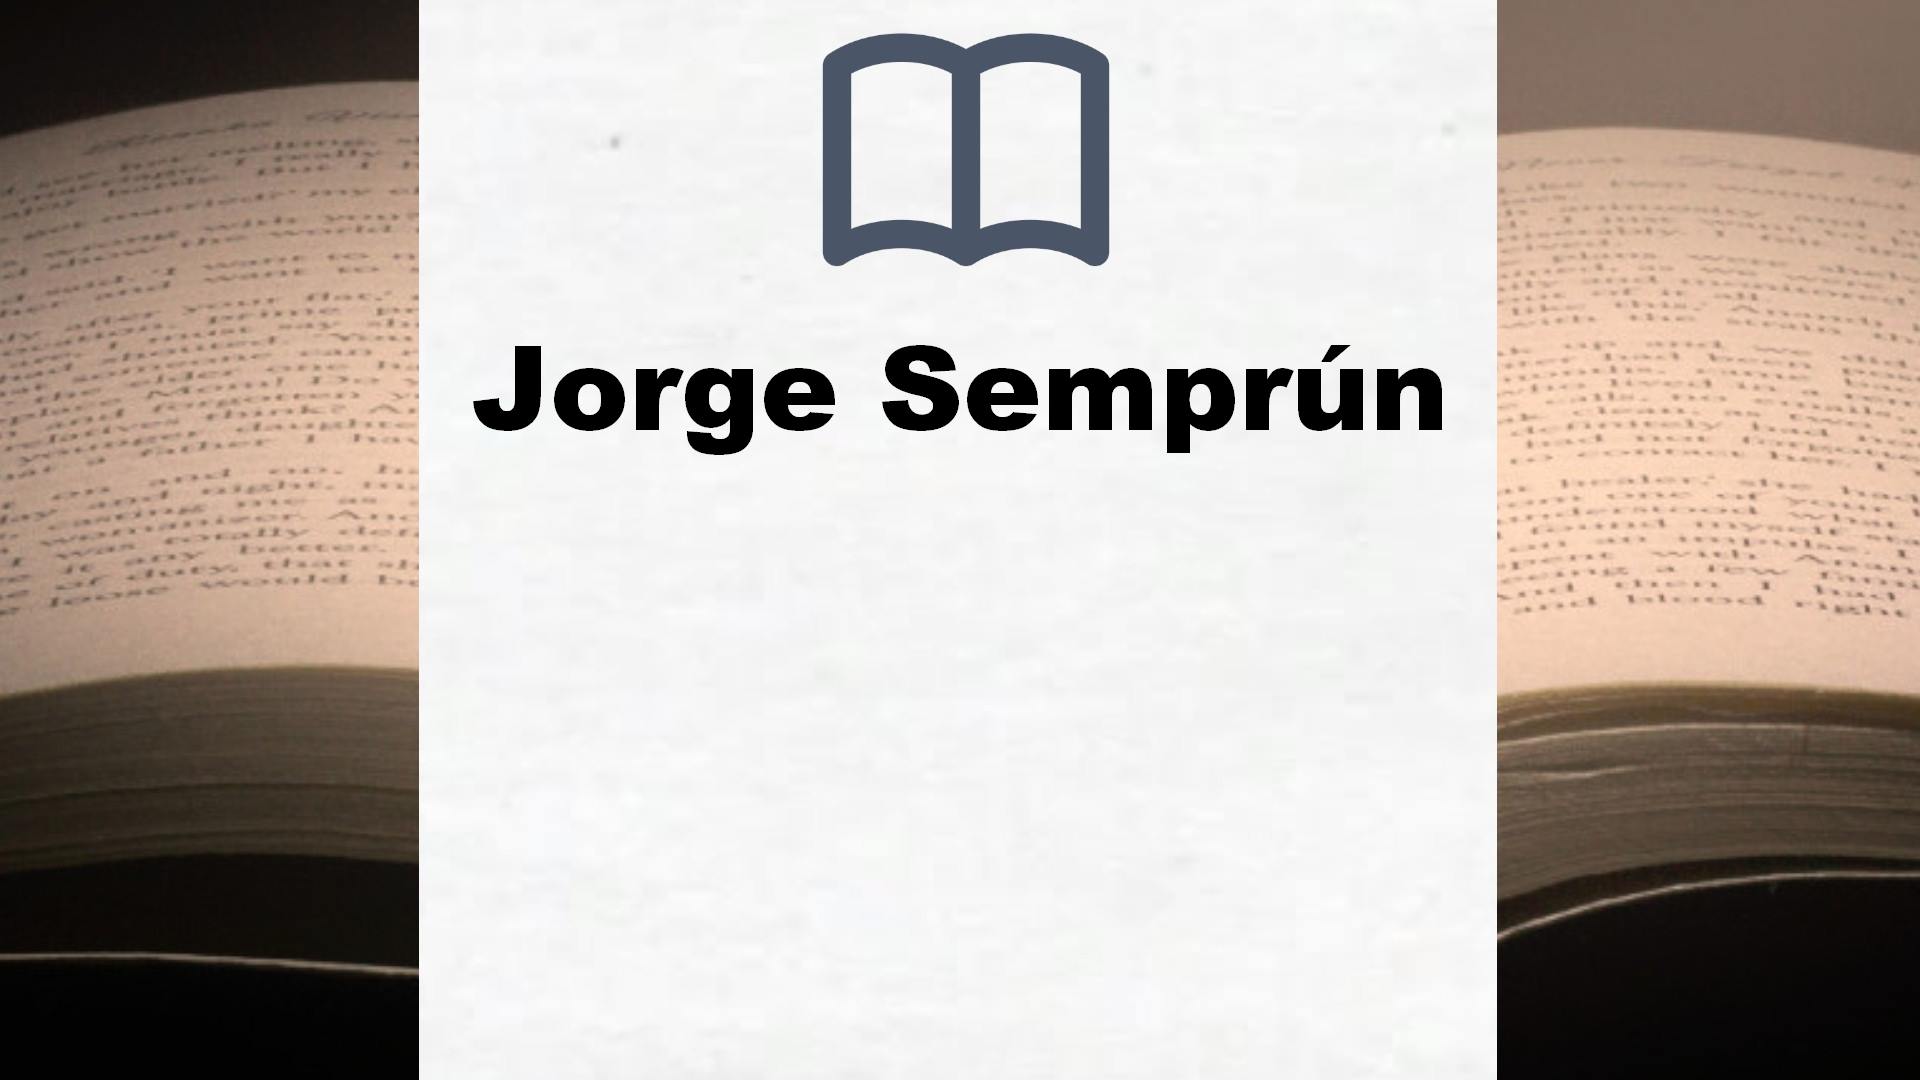 Libros Jorge Semprún